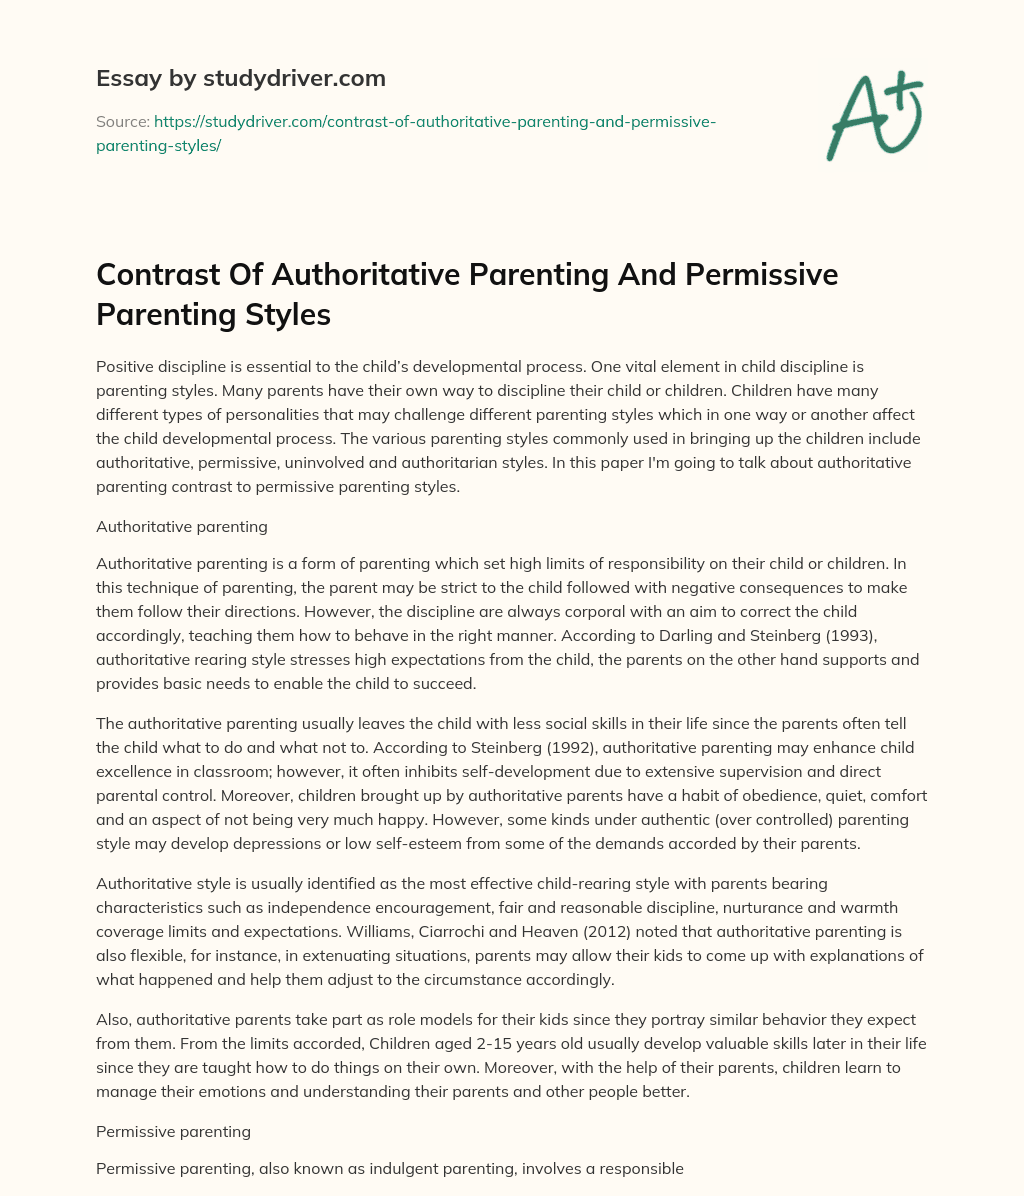 Contrast of Authoritative Parenting and Permissive Parenting Styles essay